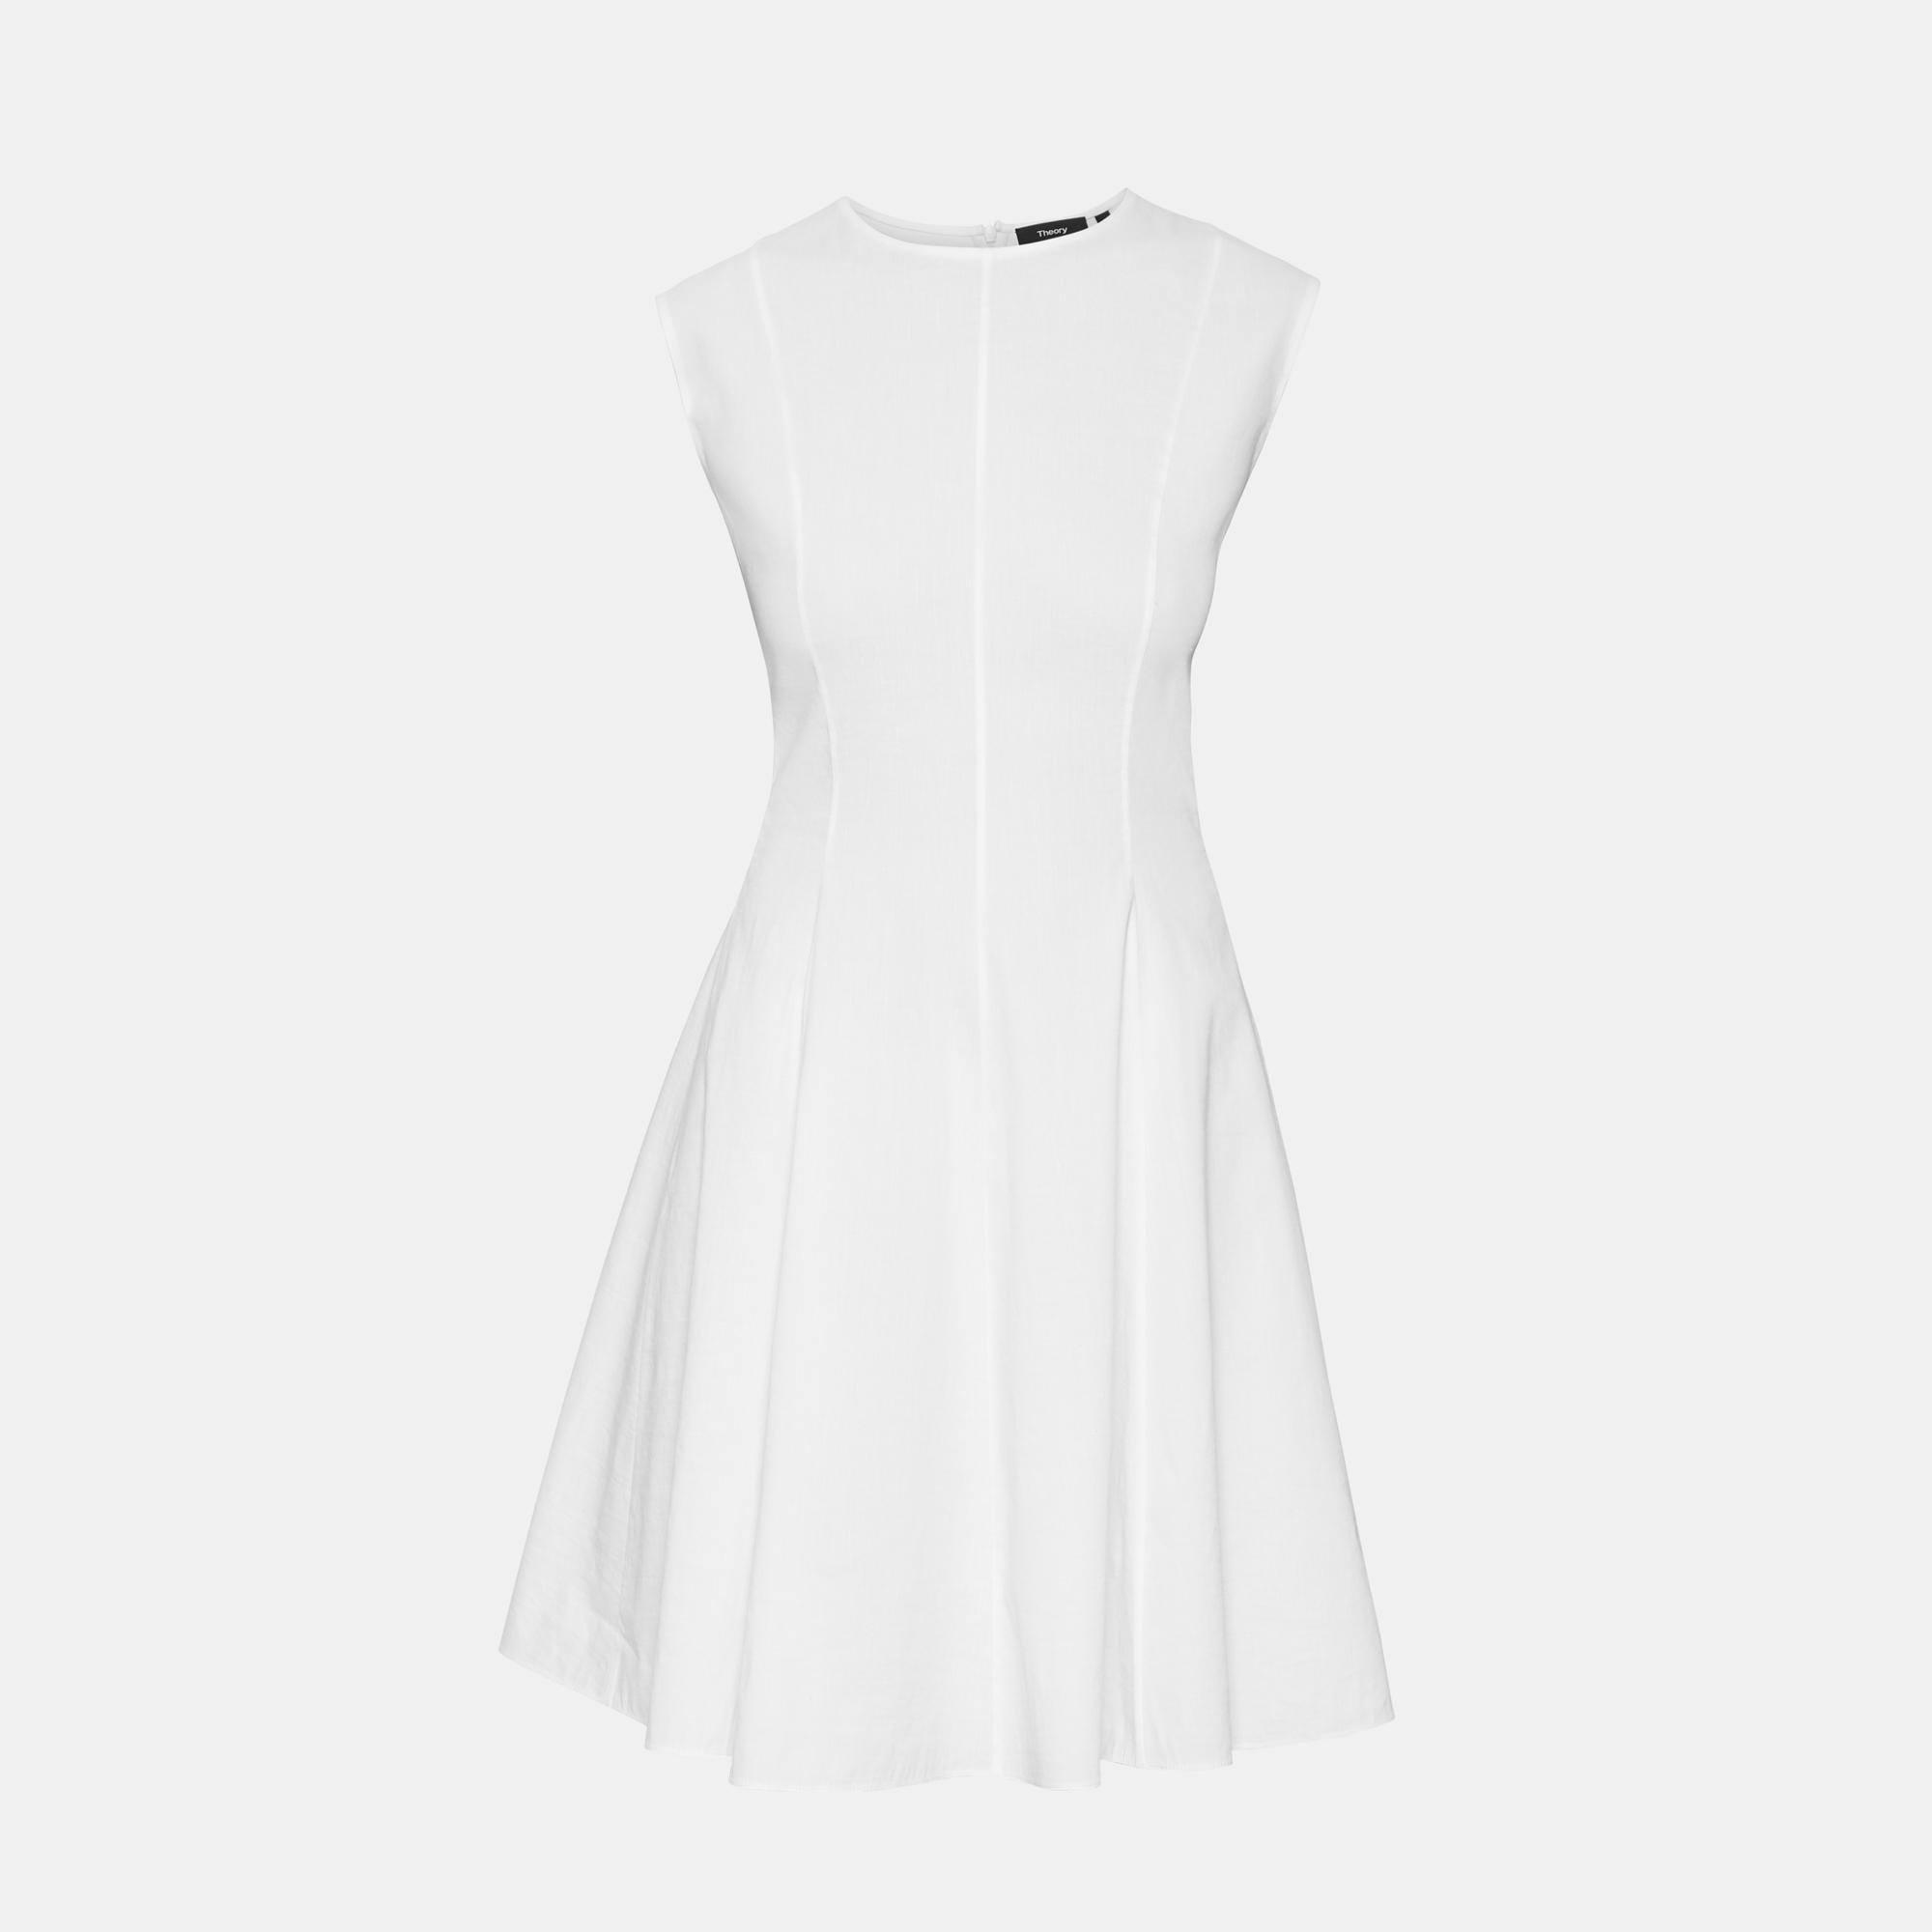 all white peplum dress